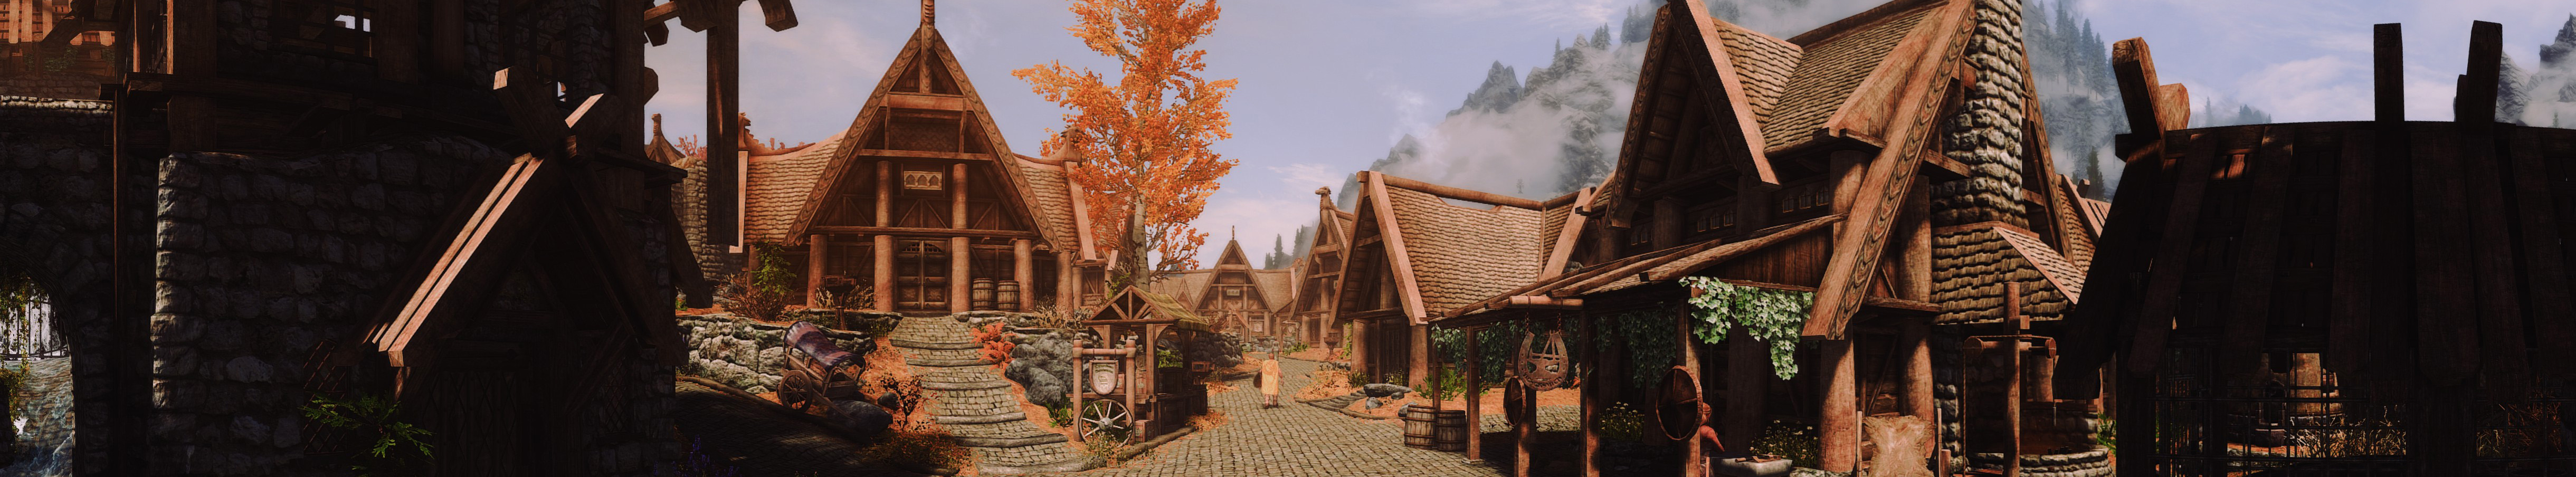 General 4881x904 The Elder Scrolls V: Skyrim GPUs screen shot RPG video games Whiterun fantasy town fantasy city PC gaming